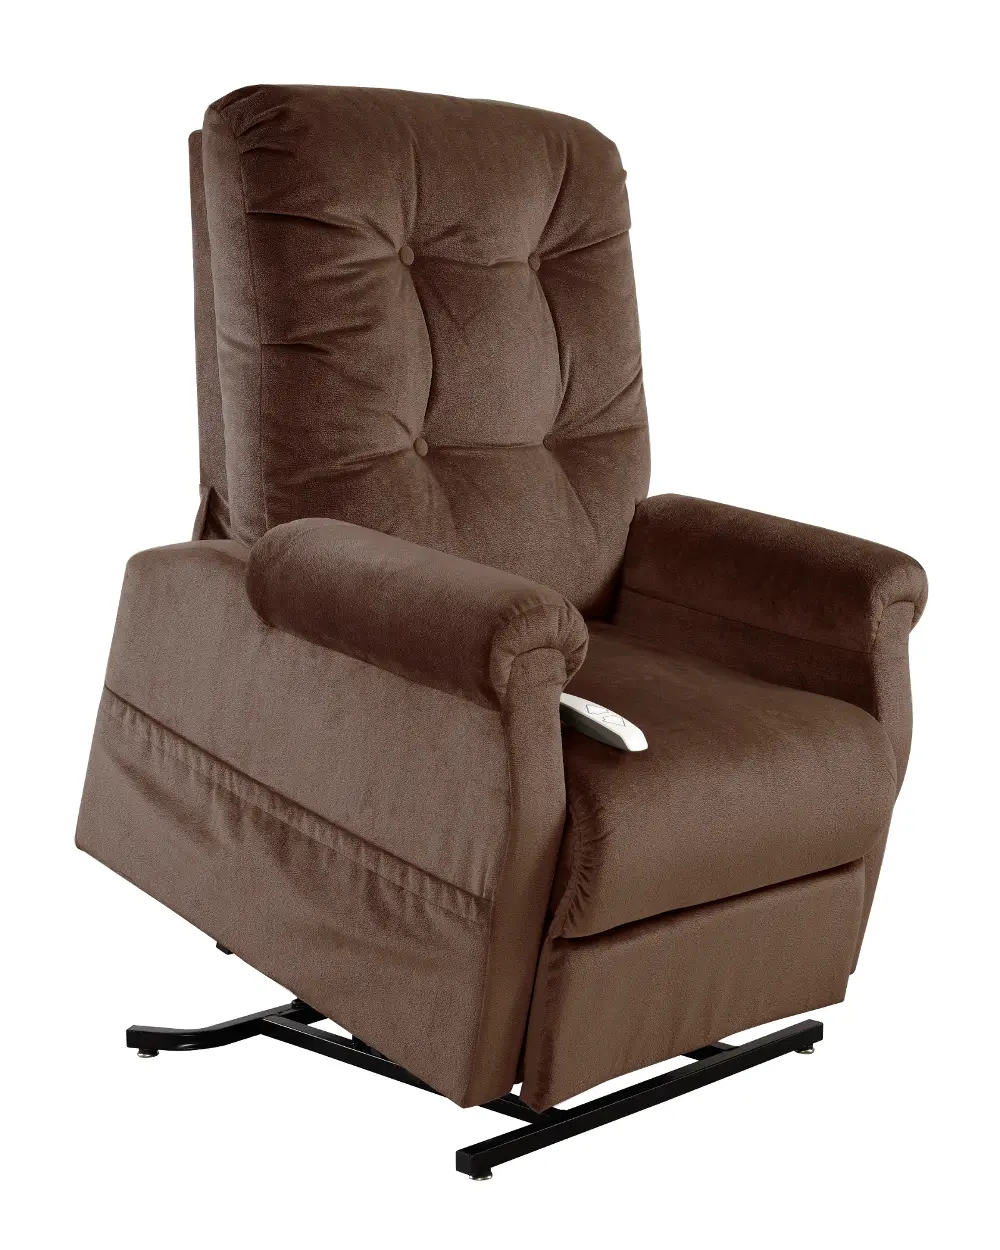 Chocolate Power Recliner Lift Chair-1